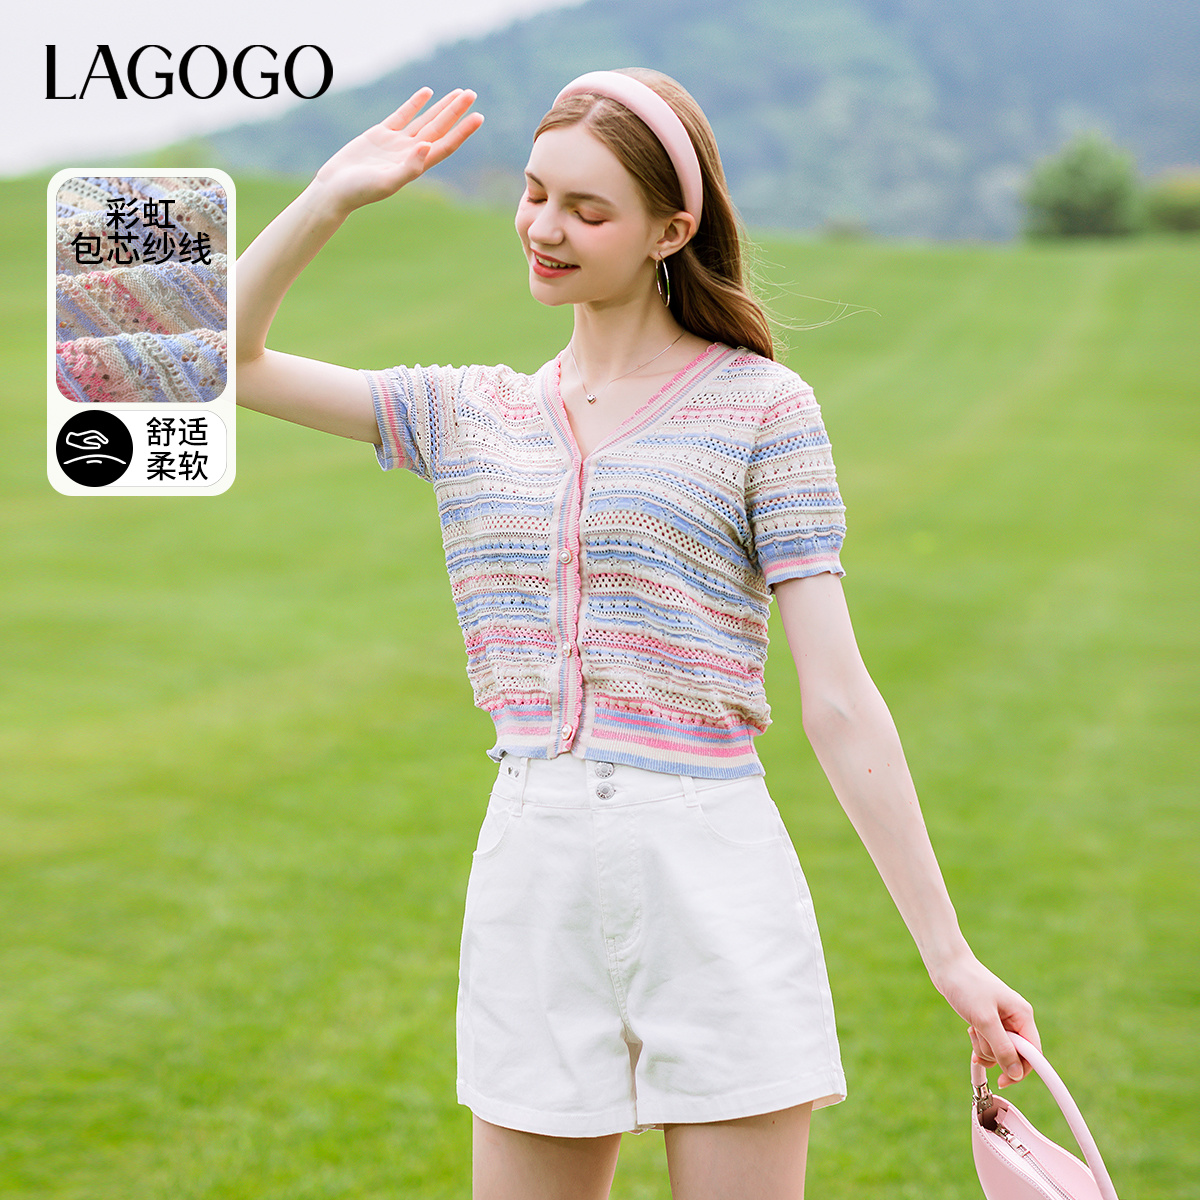 lagogo彩虹条纹针织衫短款修身